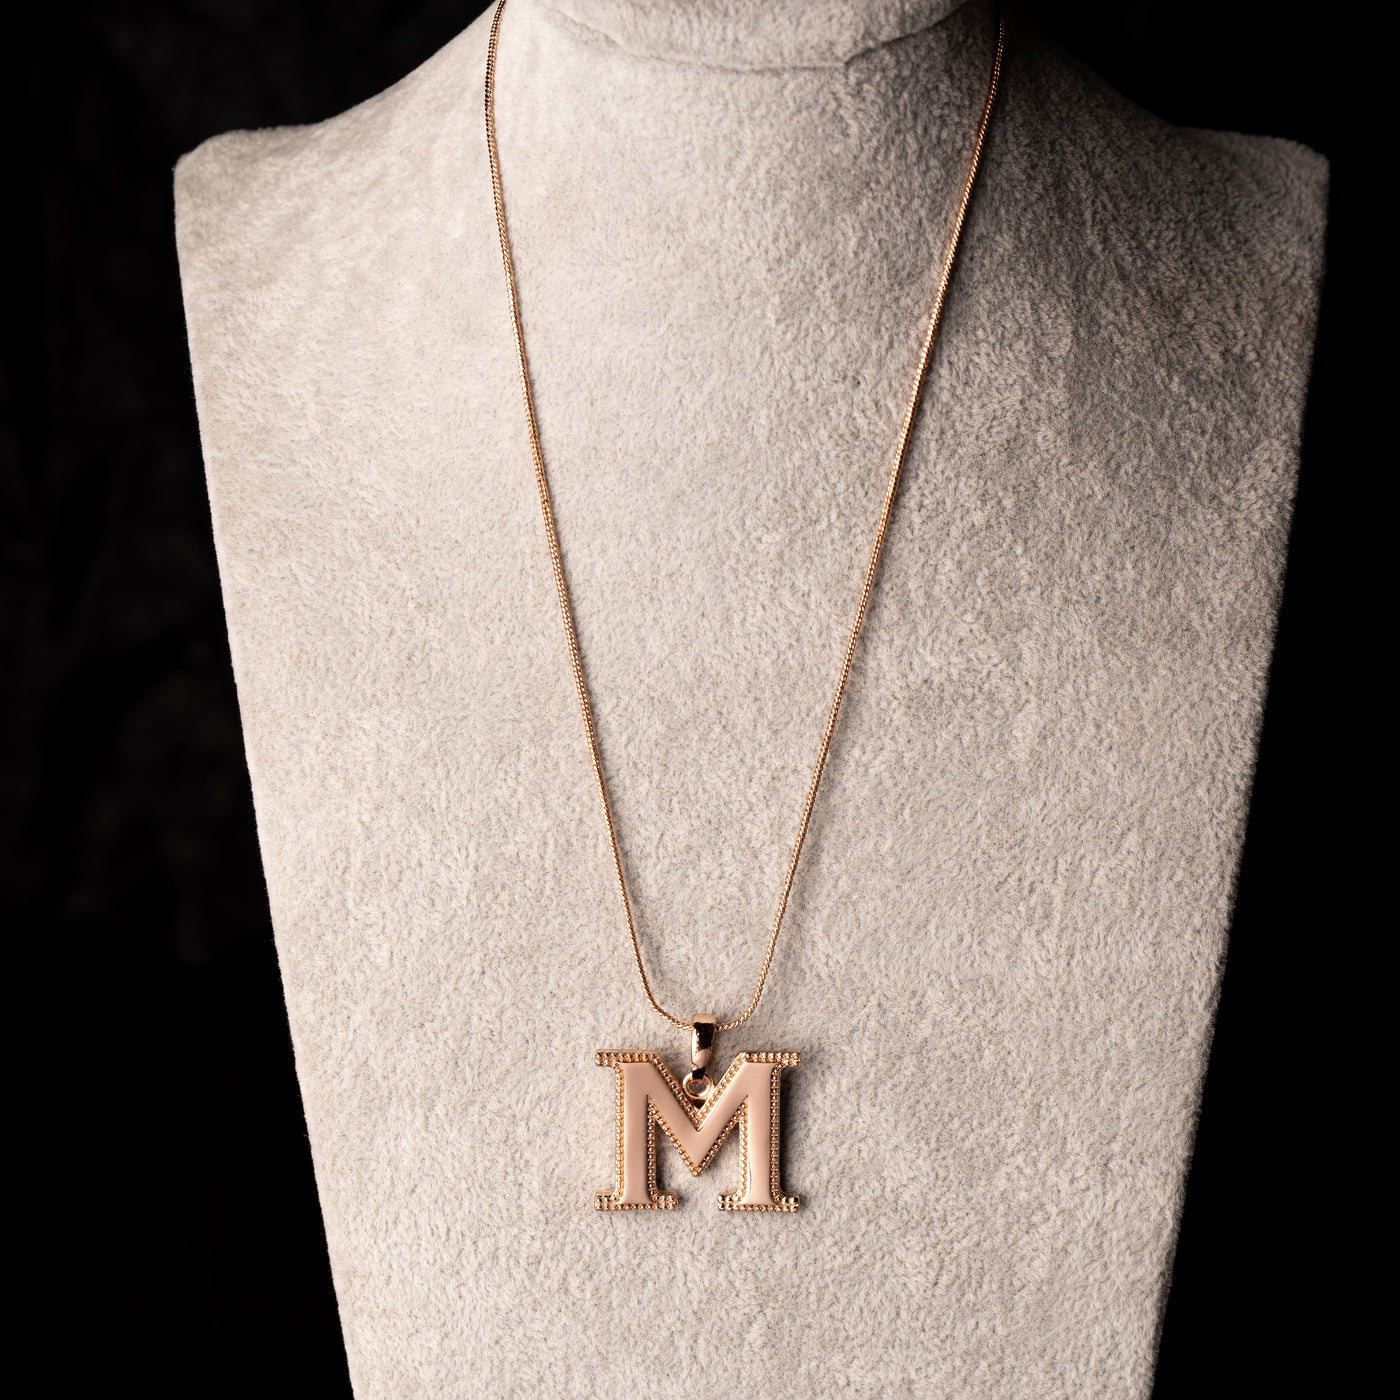 Estele - Charm "M" Rosegold plated Pendant